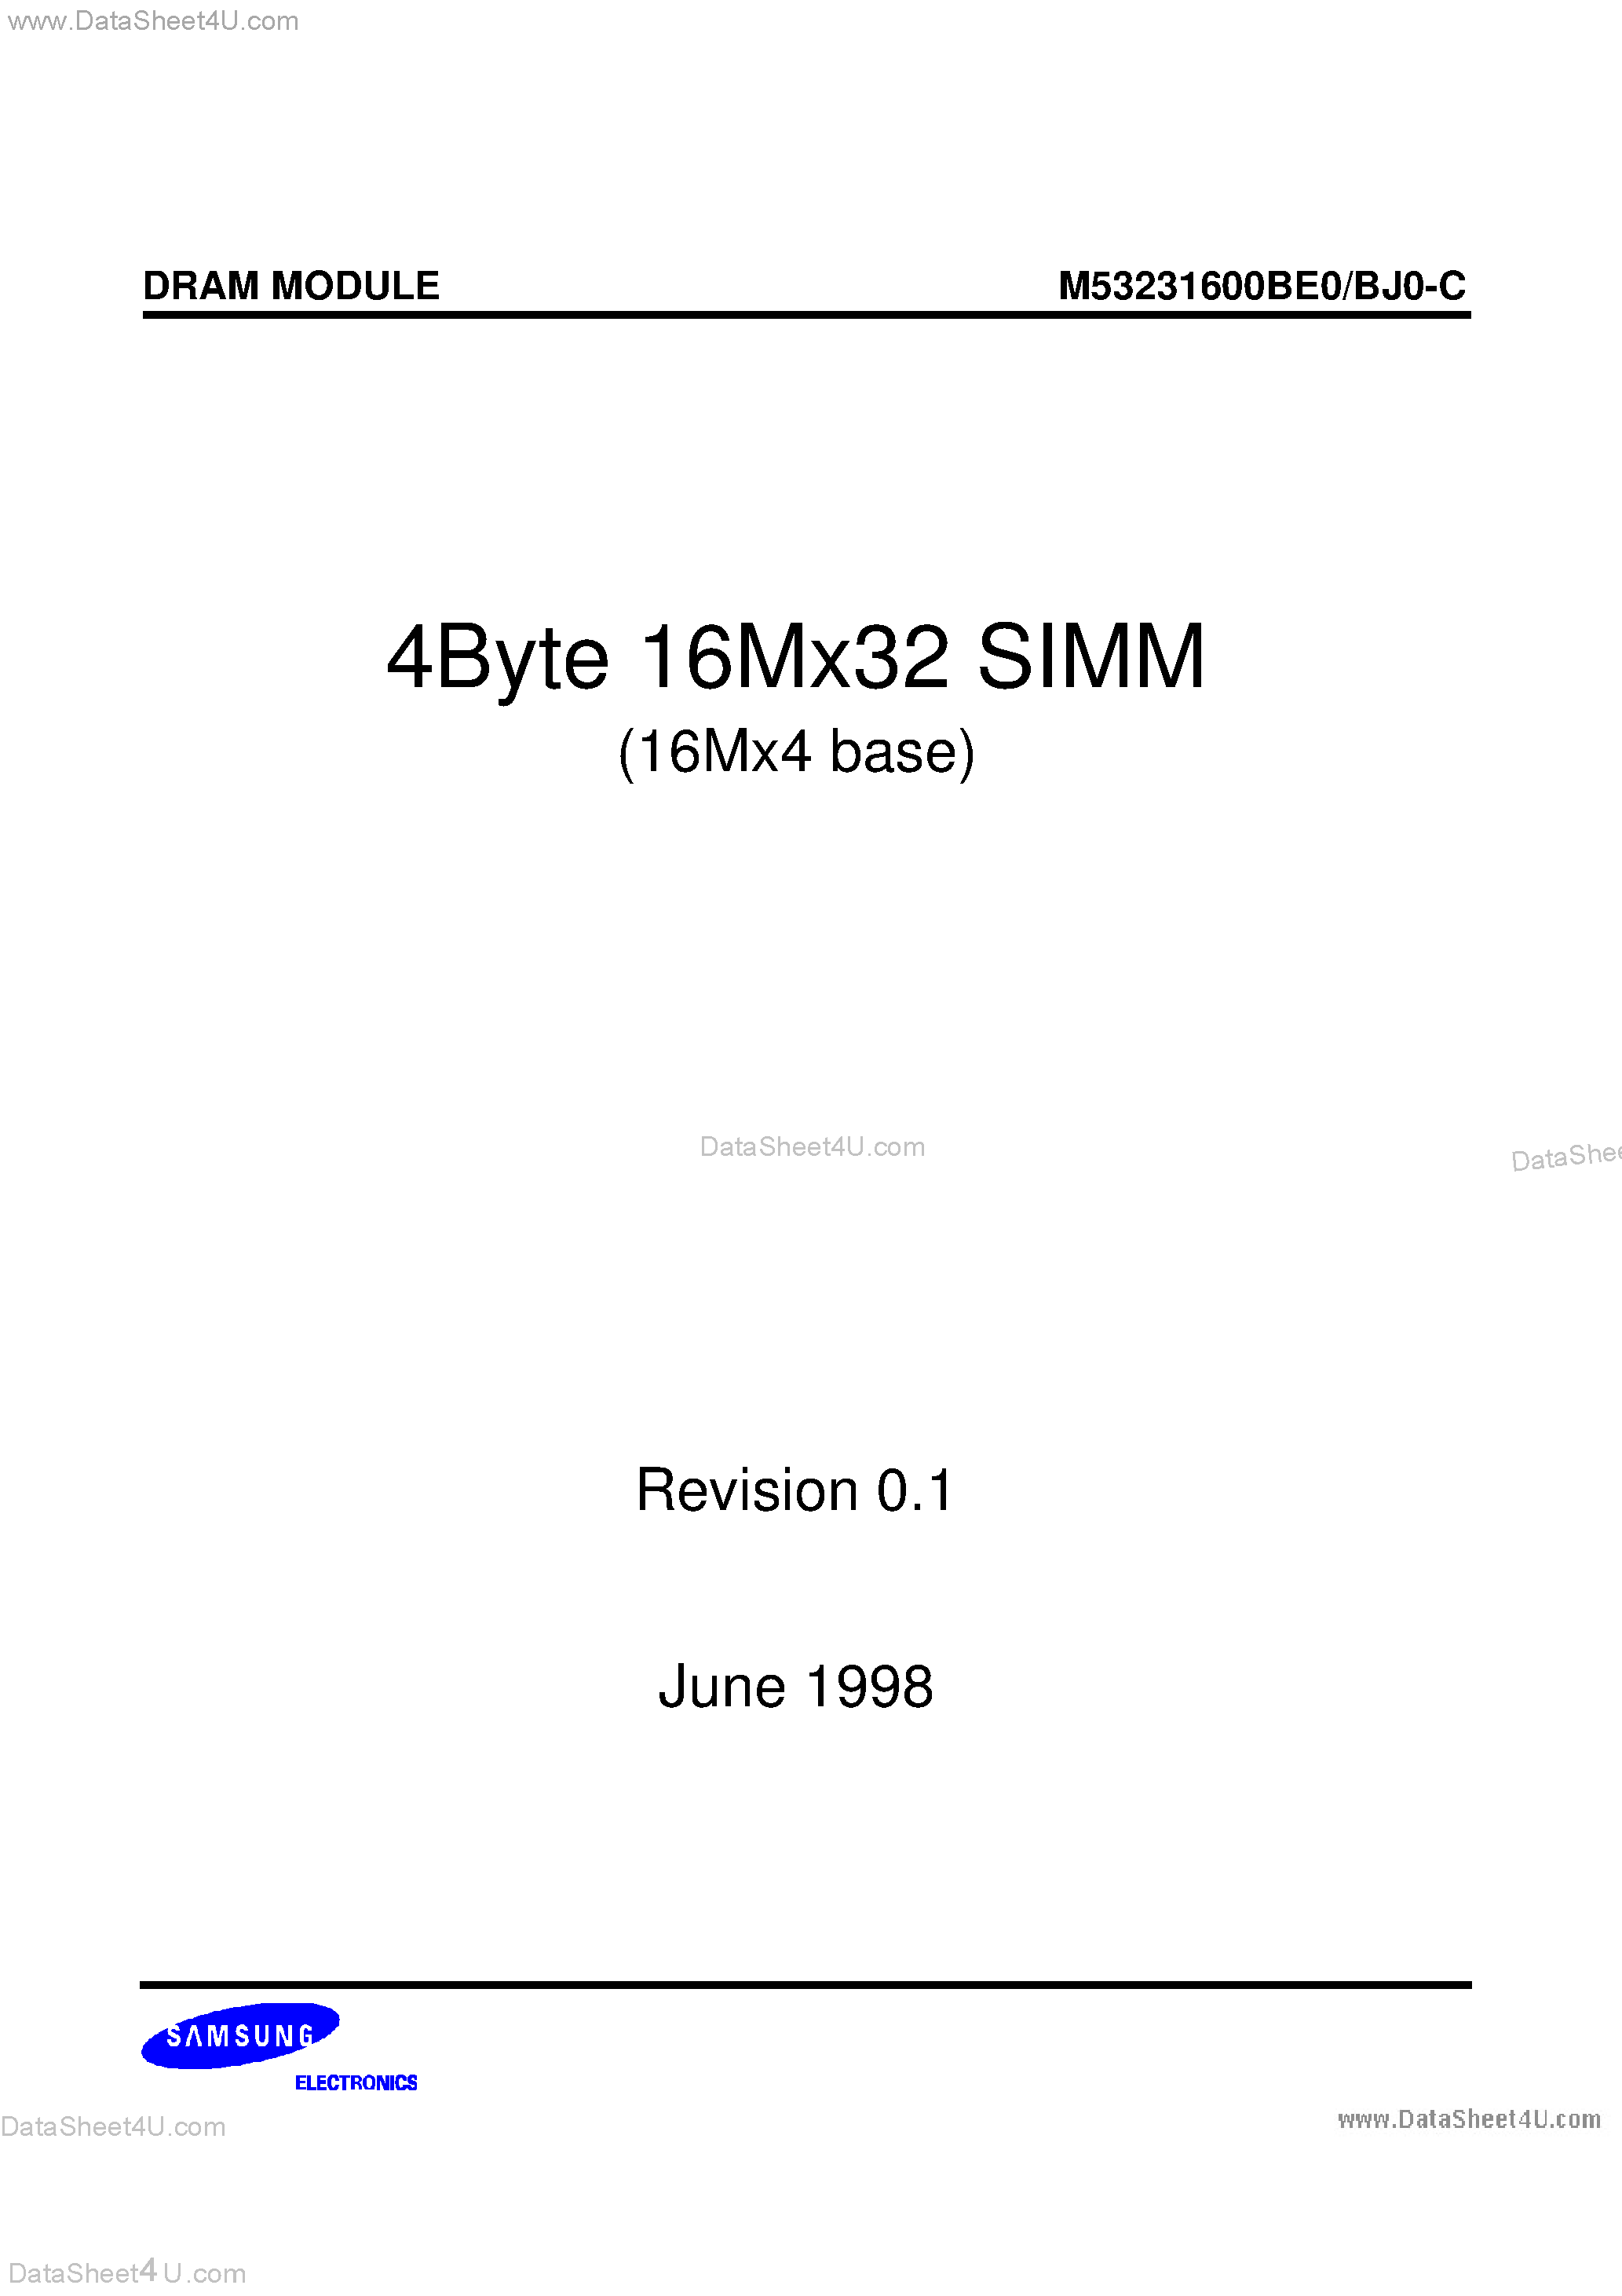 Даташит M53231600BE0 - (M53231600BE0/BJ0-C) DRAM Module страница 1